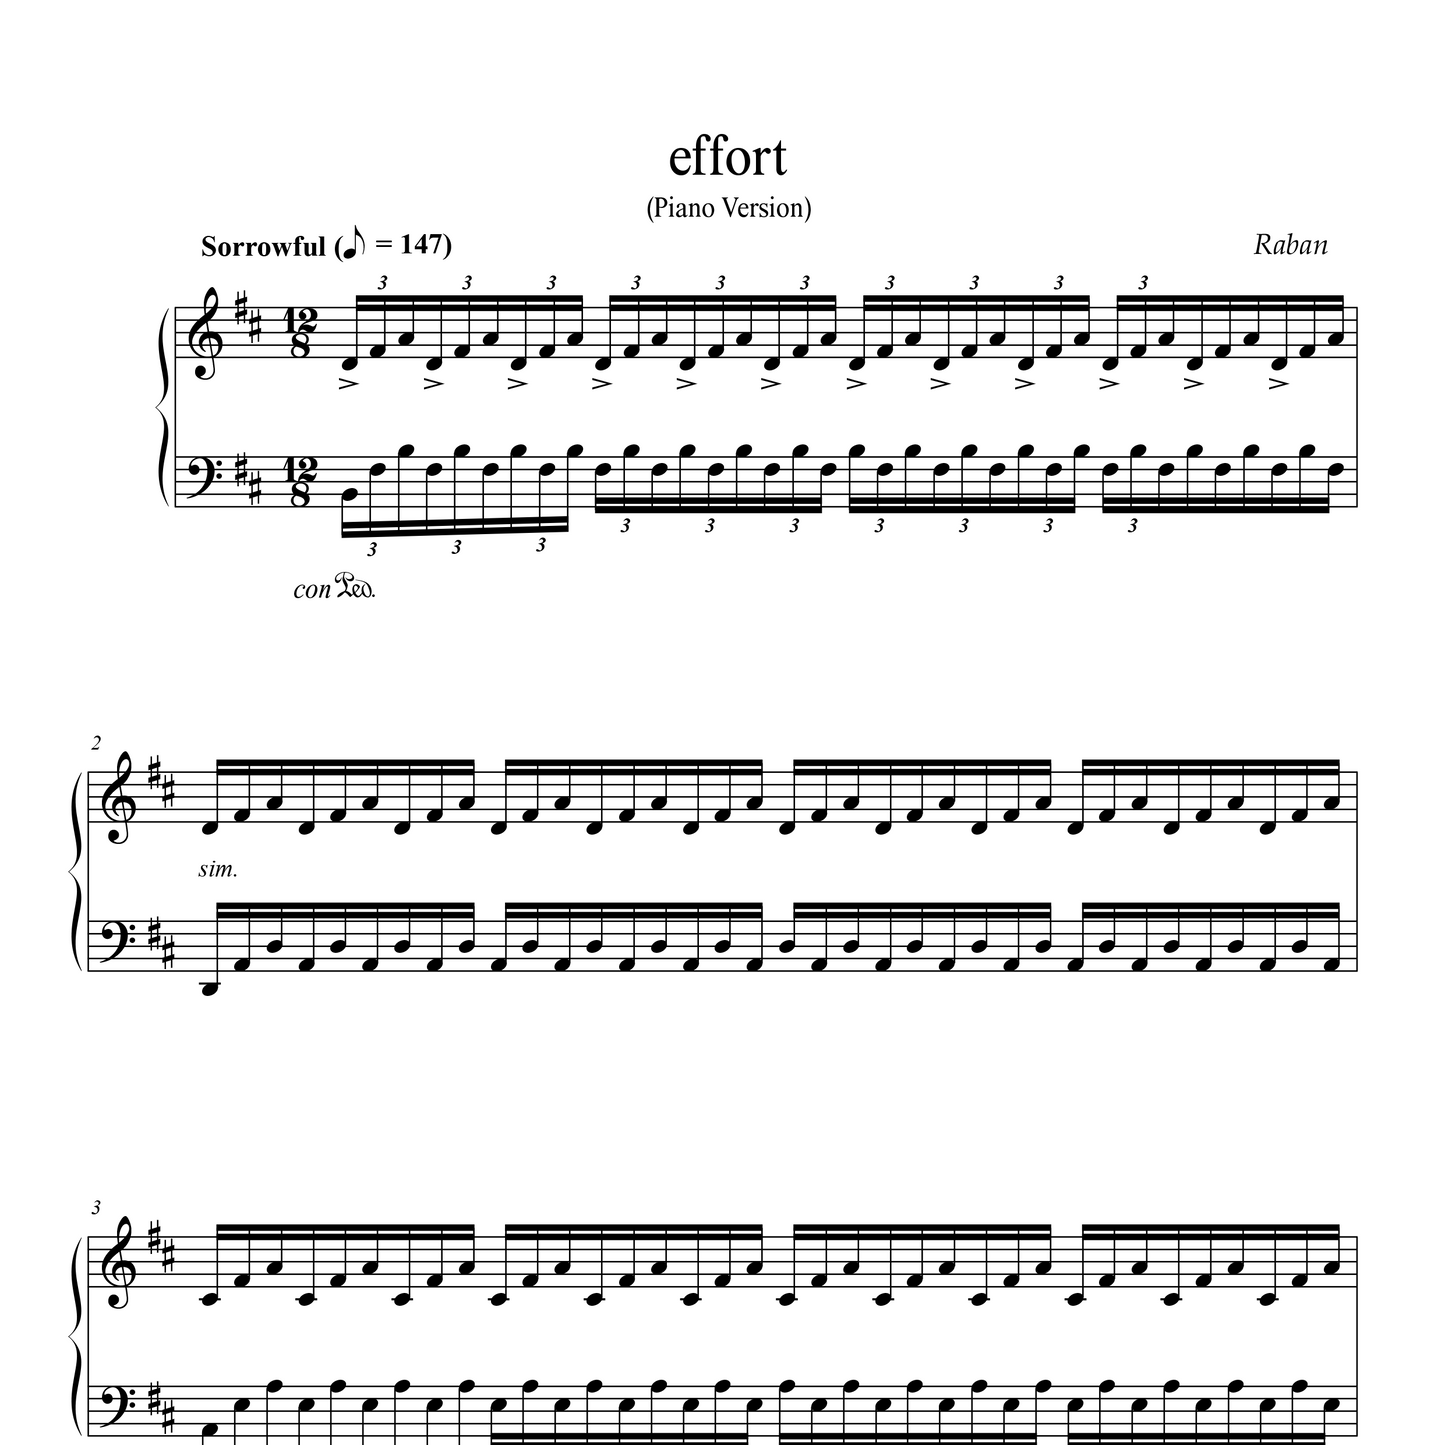 effort (Piano Version) - Sheet Music